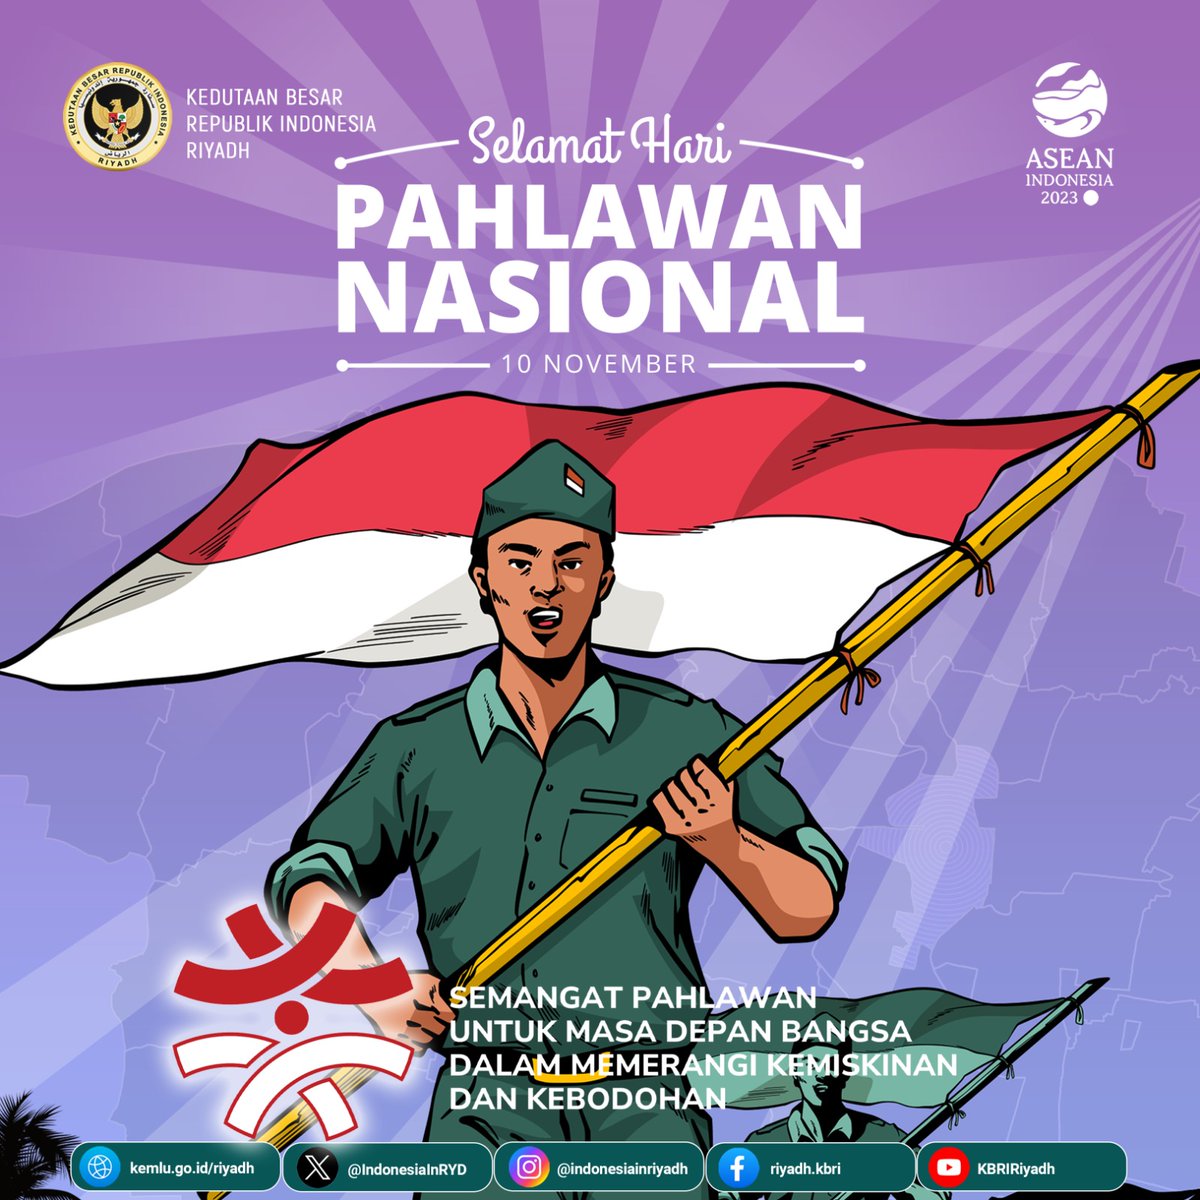 Selamat Hari Pahlawan Nasional

10 November 2023

#inidiplomasi
#indonesianway #kbririyadh #haripahlawan #rintiskemajuan